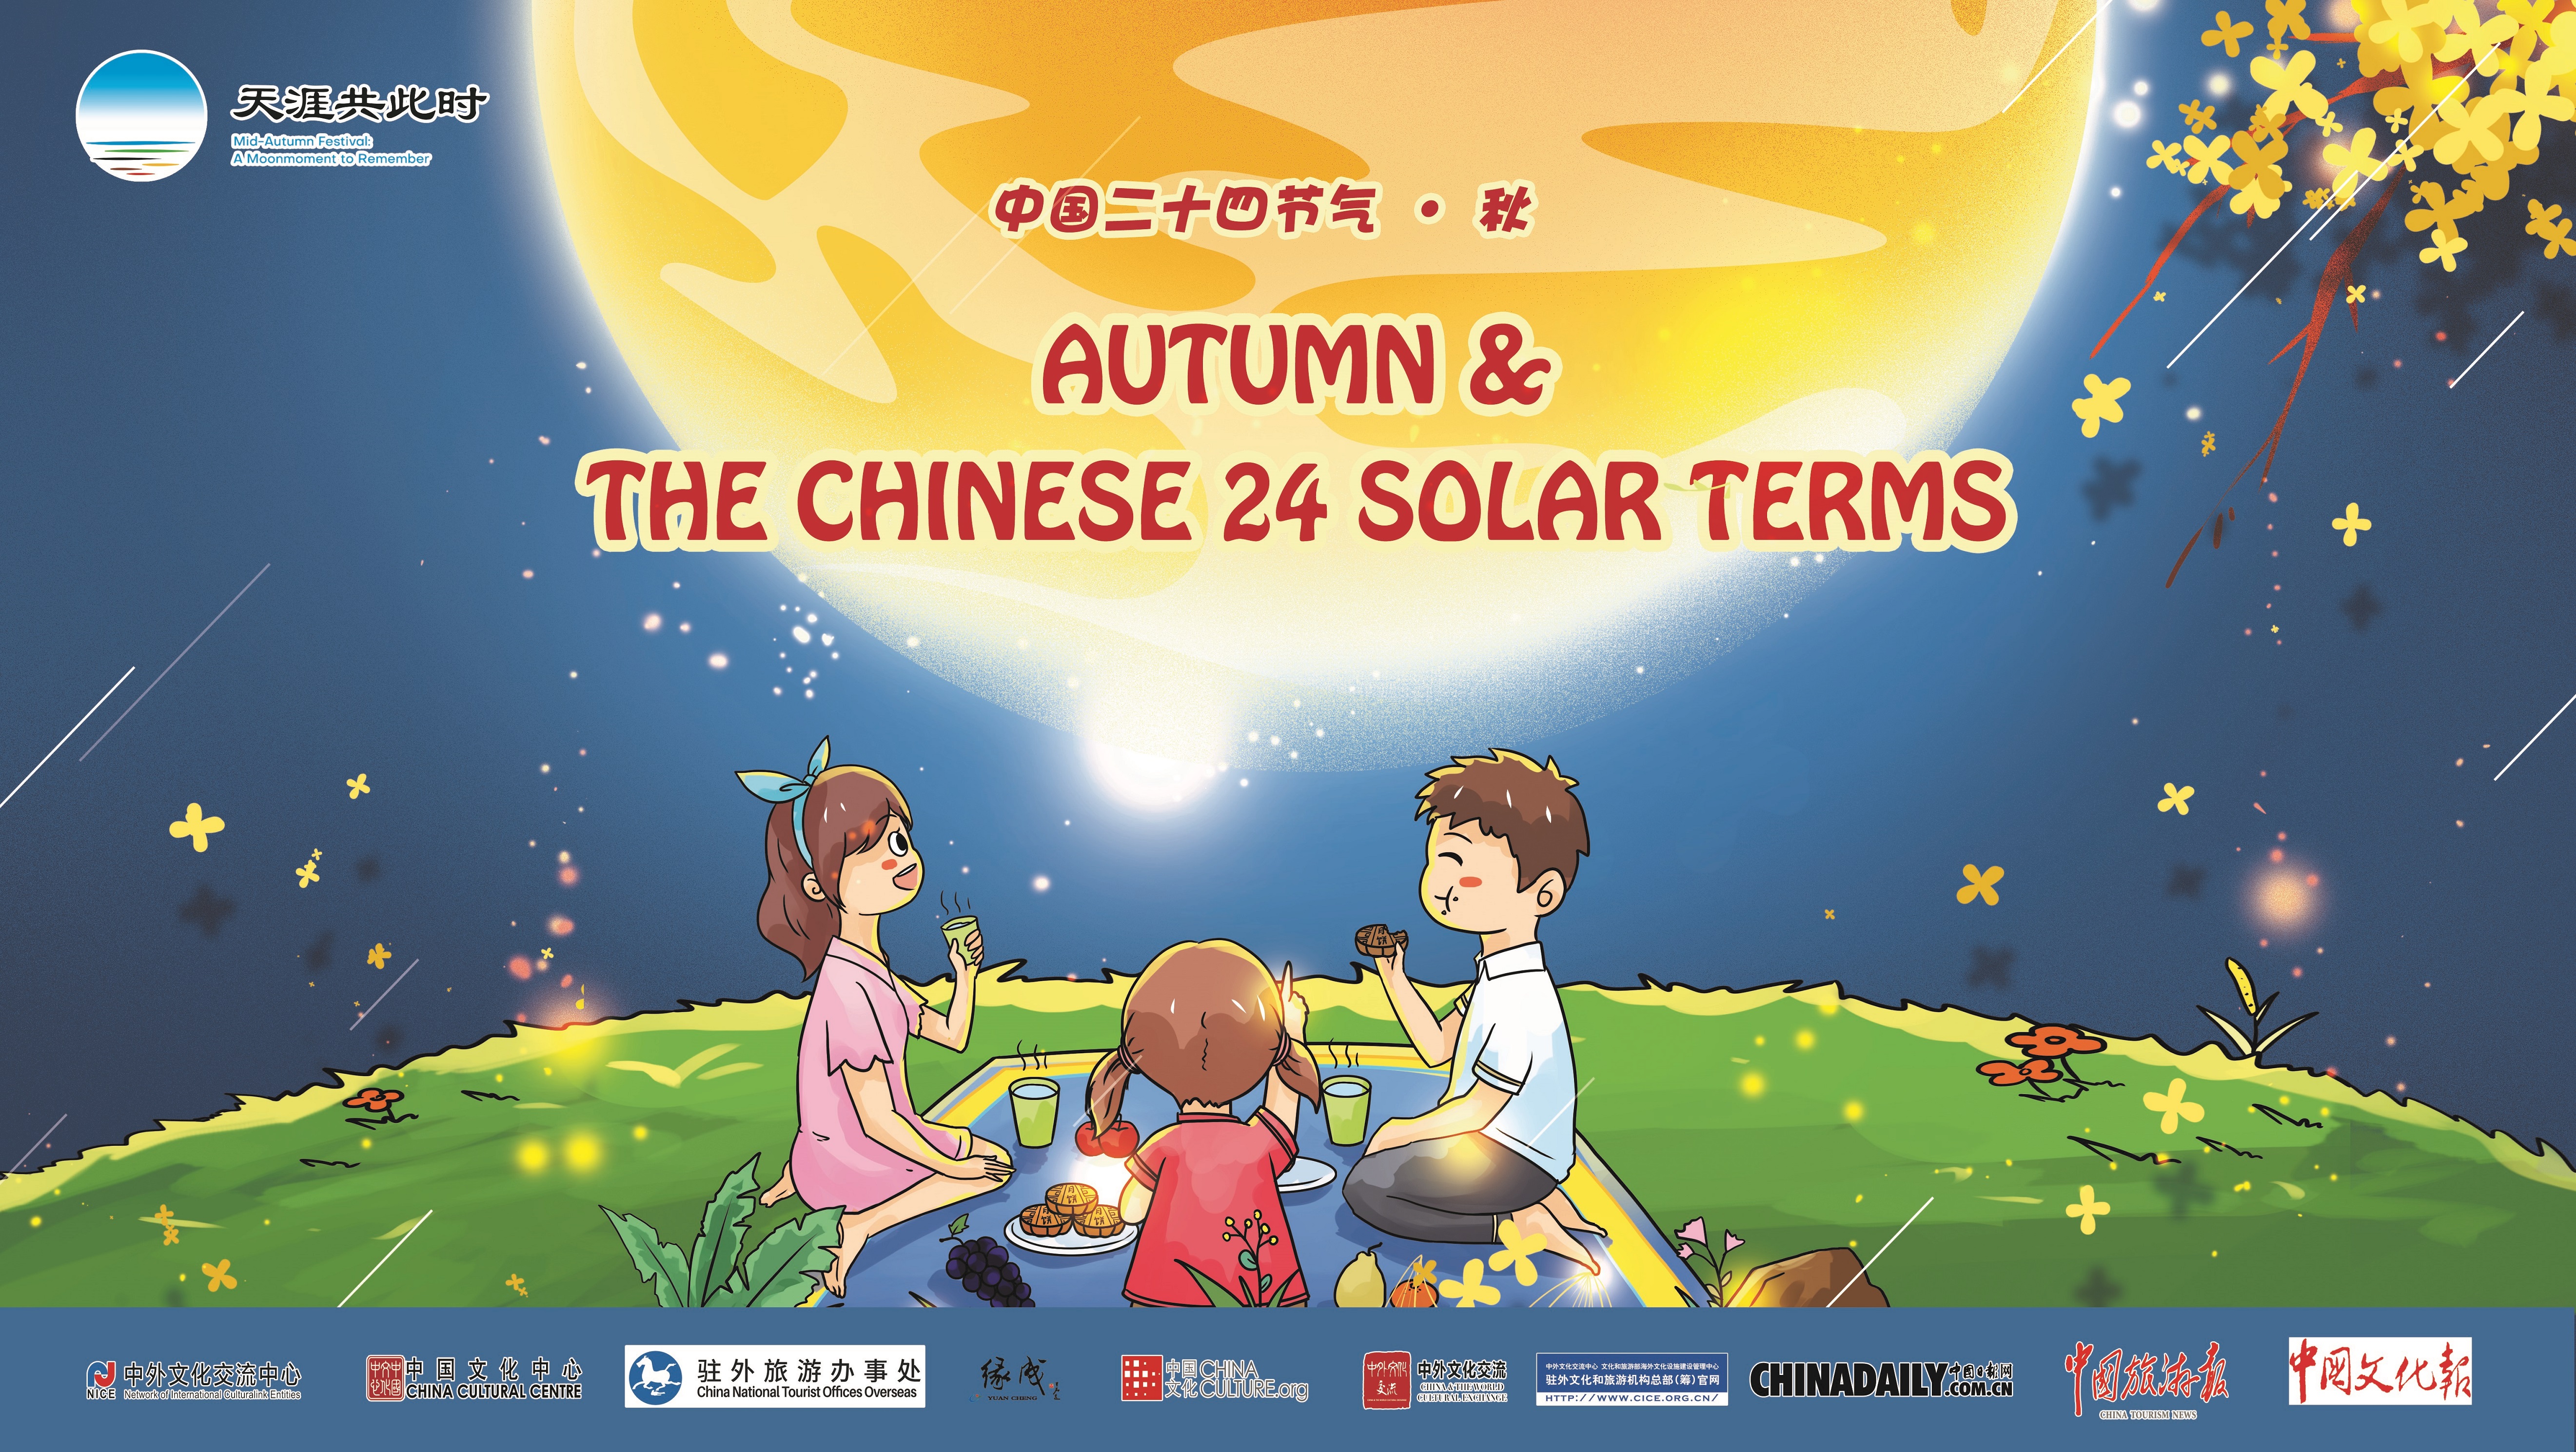 “中国二十四节气·秋”动画短视频   “Autumn & The Chinese 24 Solar Terms”